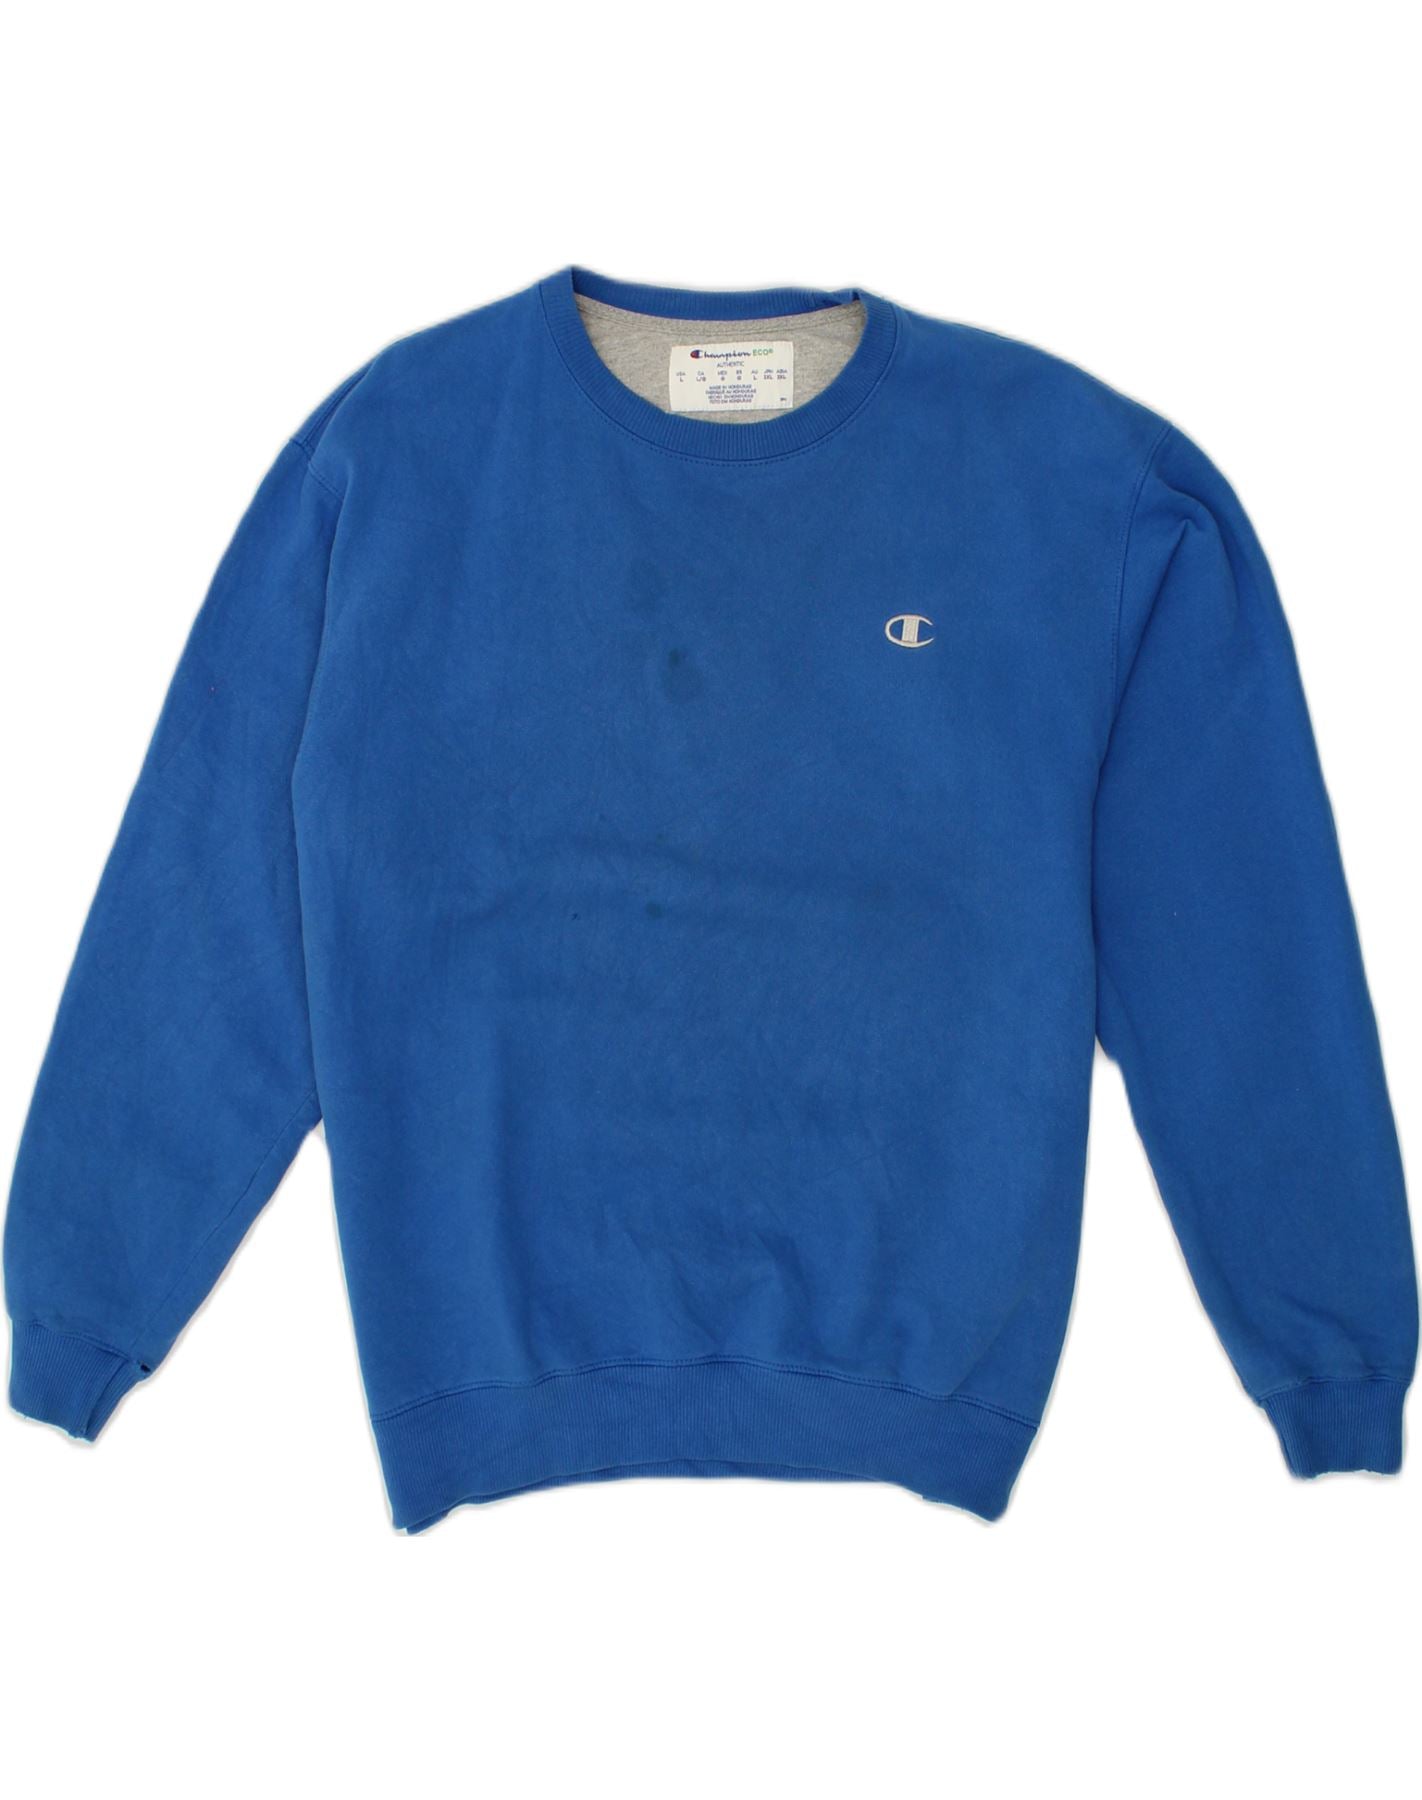 CHAMPION Mens Sweatshirt Jumper Large Blue Cotton, Vintage & Second-Hand  Clothing Online